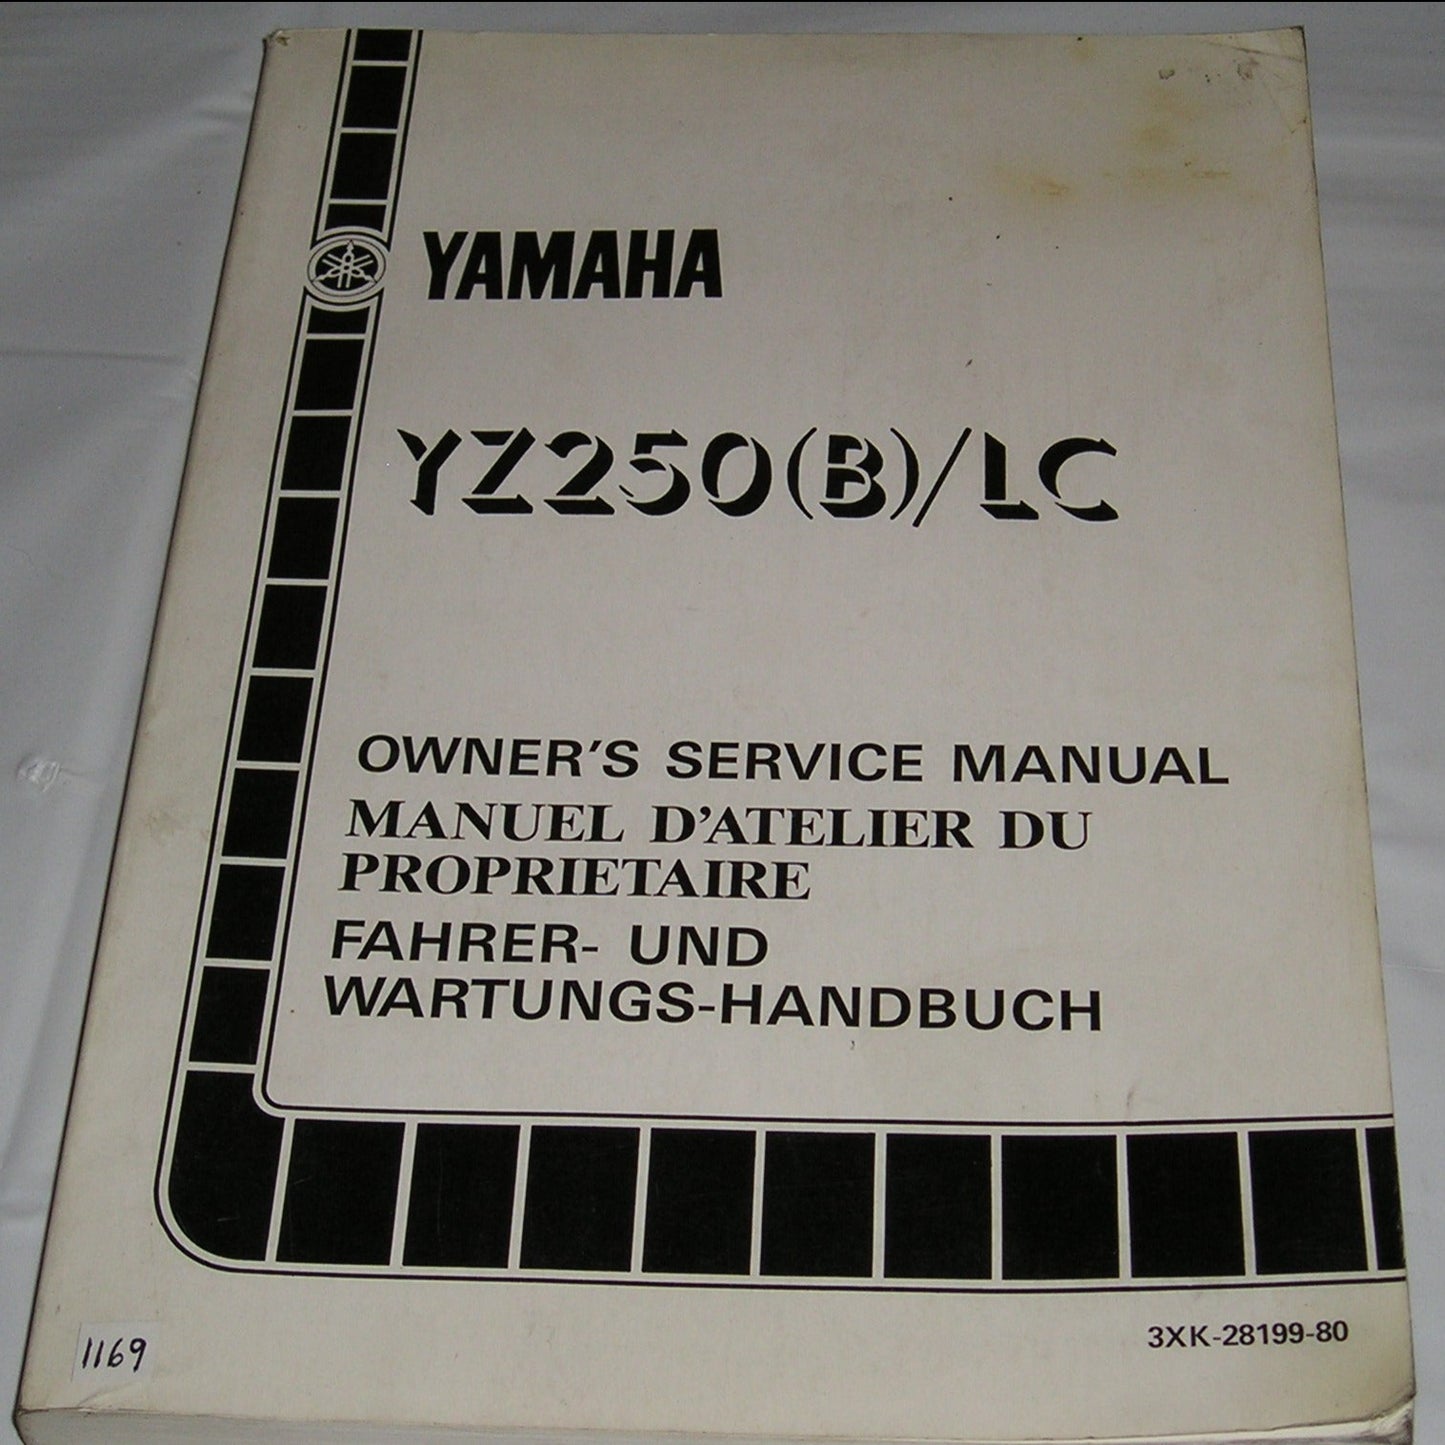 YAMAHA YZ250 (B) / LC  1991  Owner's Service Manual  3XK-28199-80  #1169